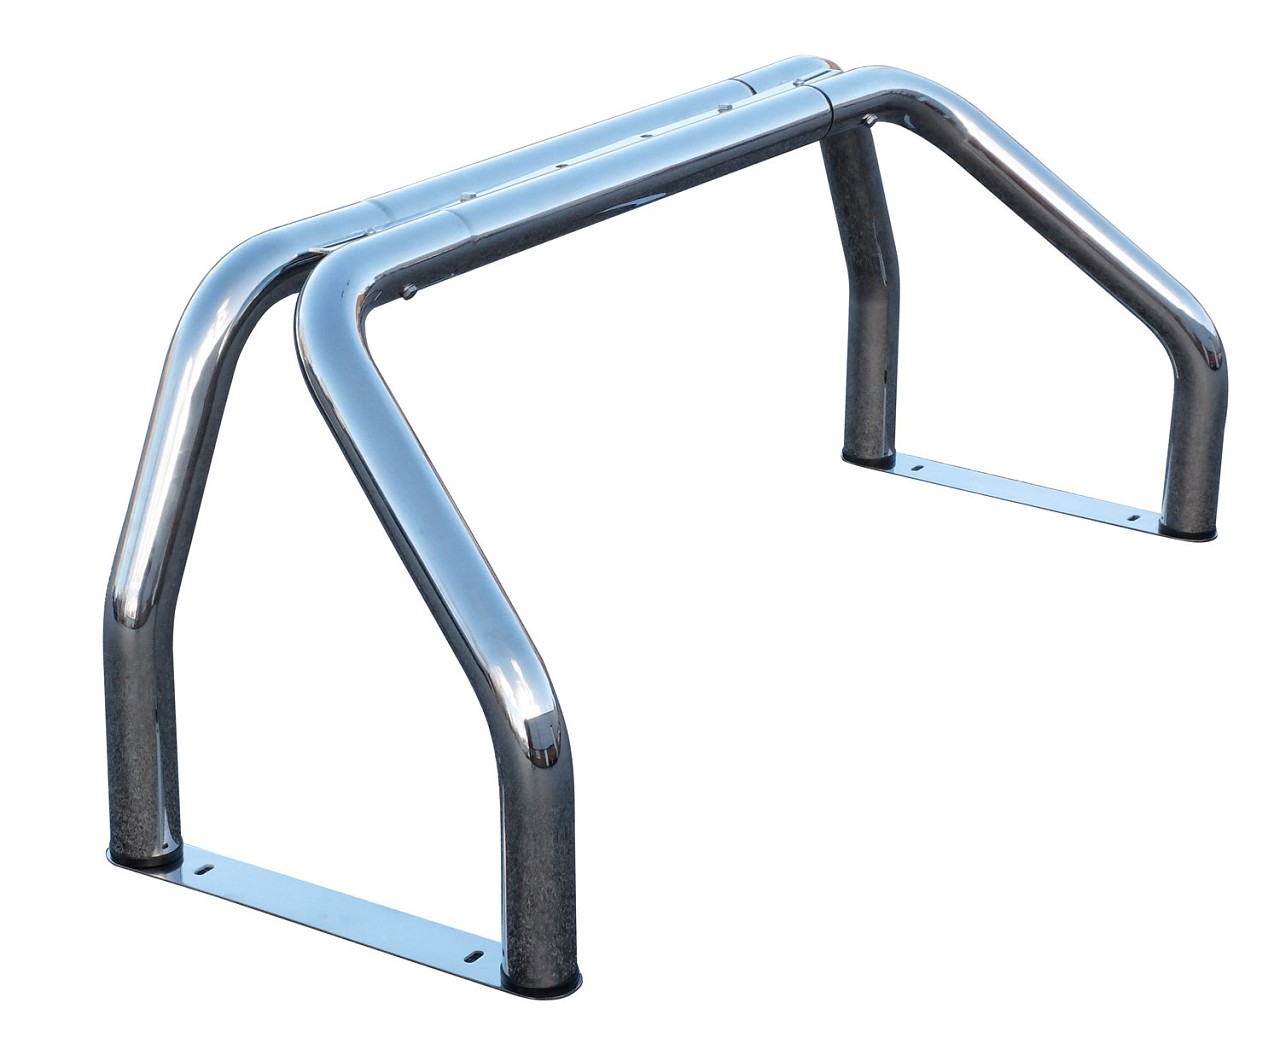 Roll bar stainless steel 76 mm pickup (adjustable 170-190 cm)